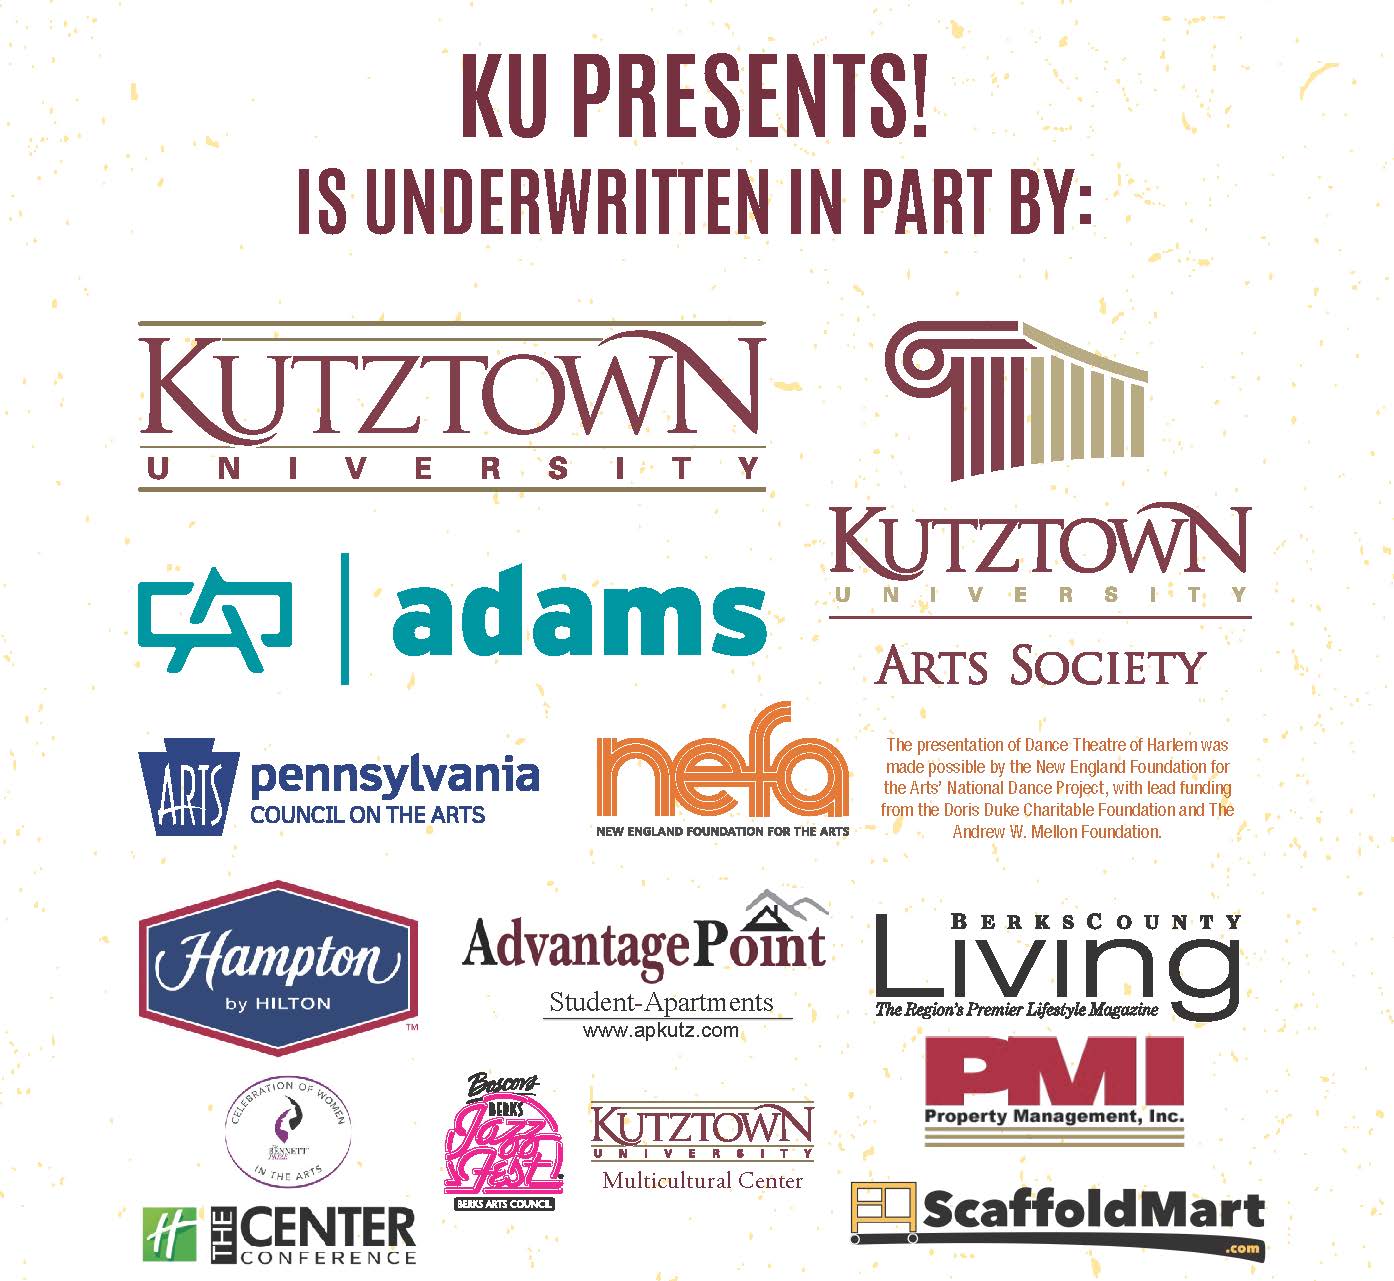 KU Presents! 2019-2020 Sponsors